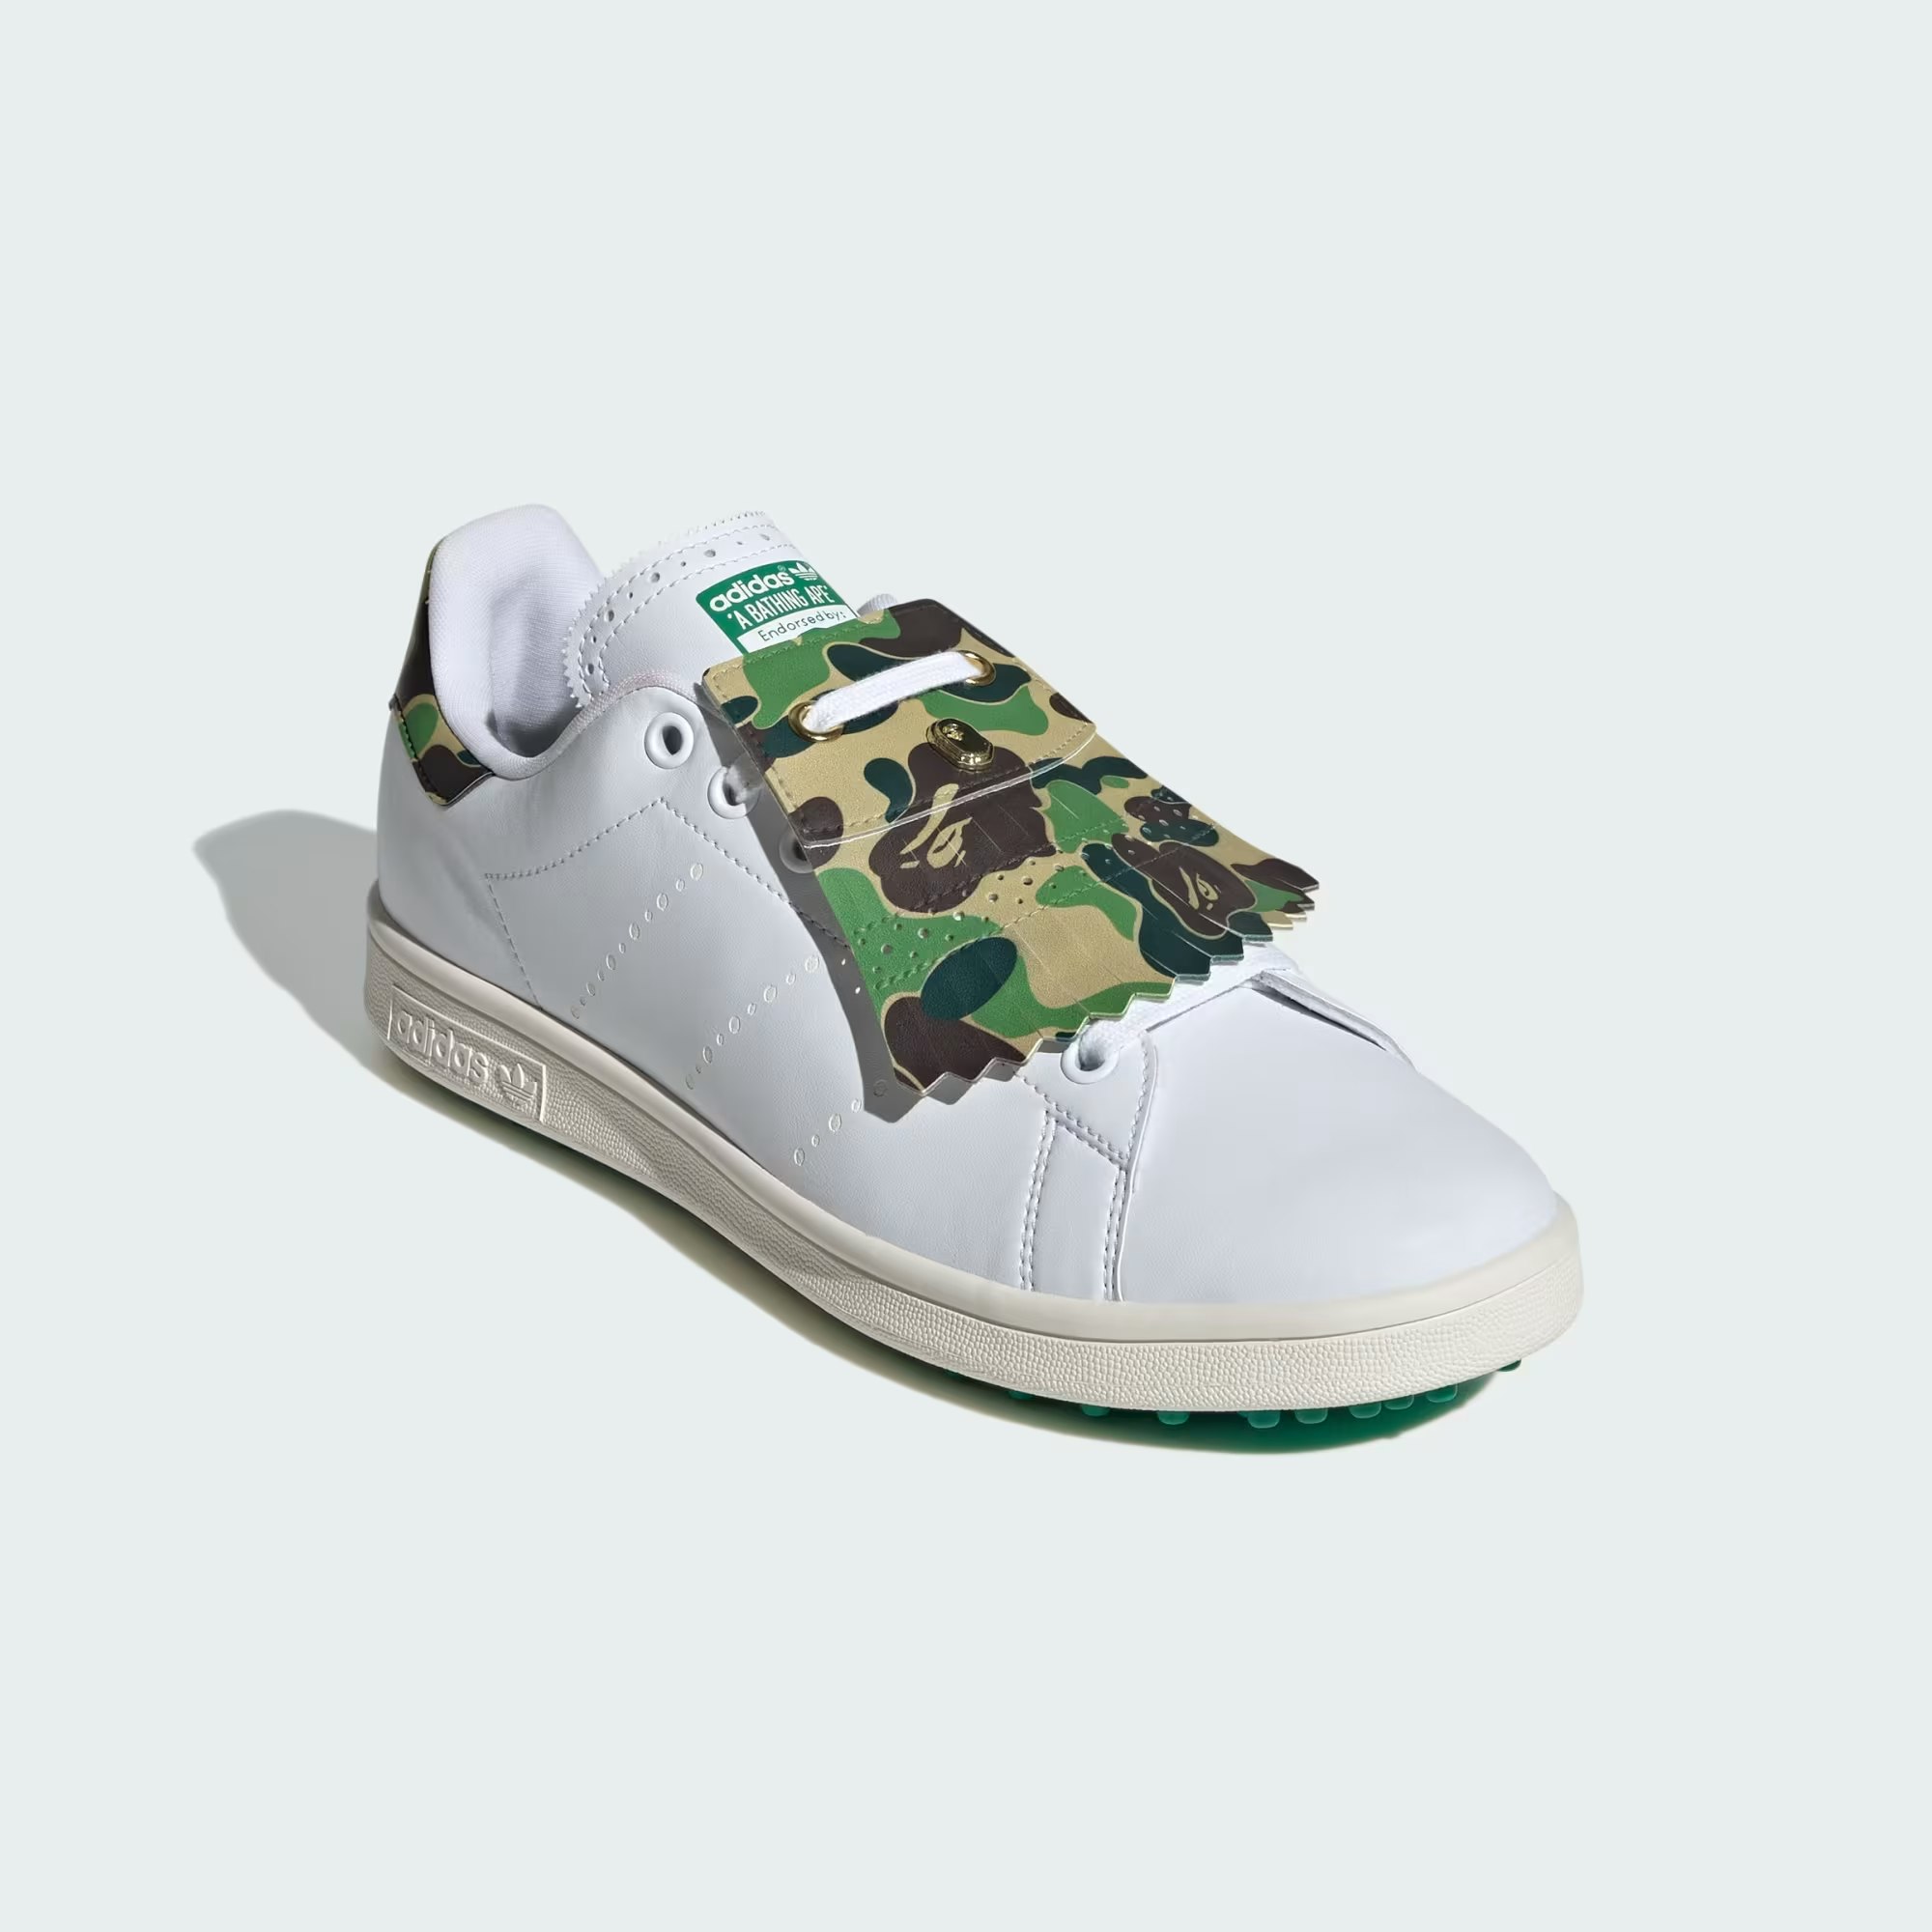 BAPE x adidas Stan Smith Golf "Footwear White"